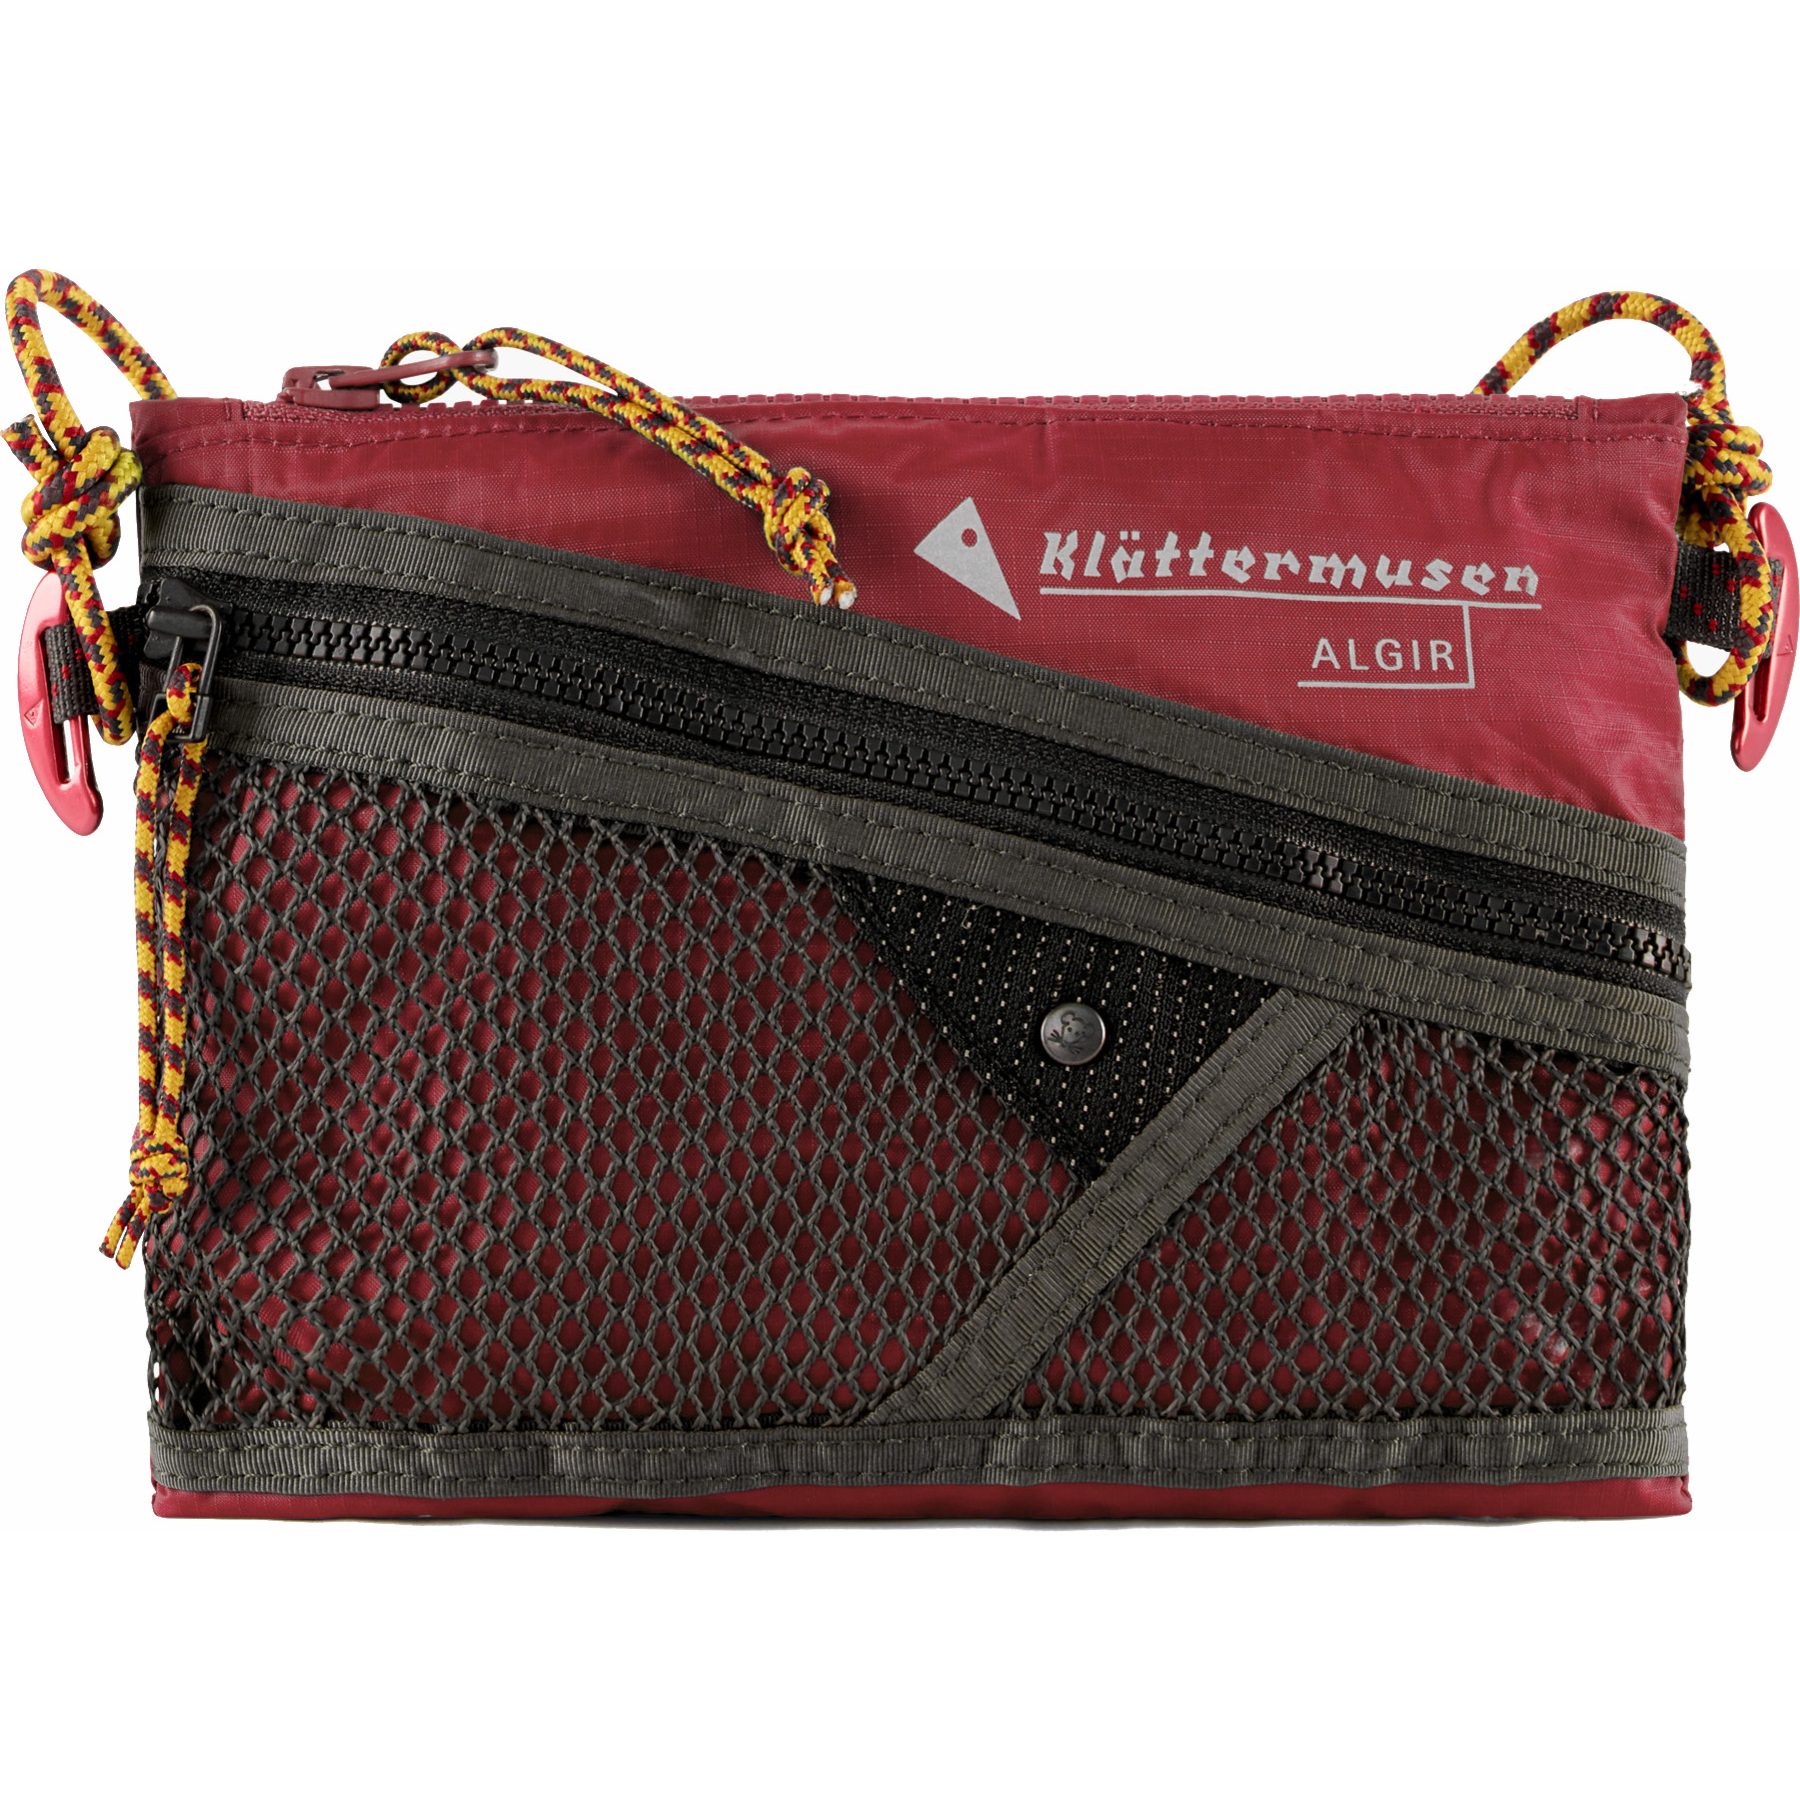 Picture of Klättermusen Algir Accessory Bag - Small - Burnt Russet